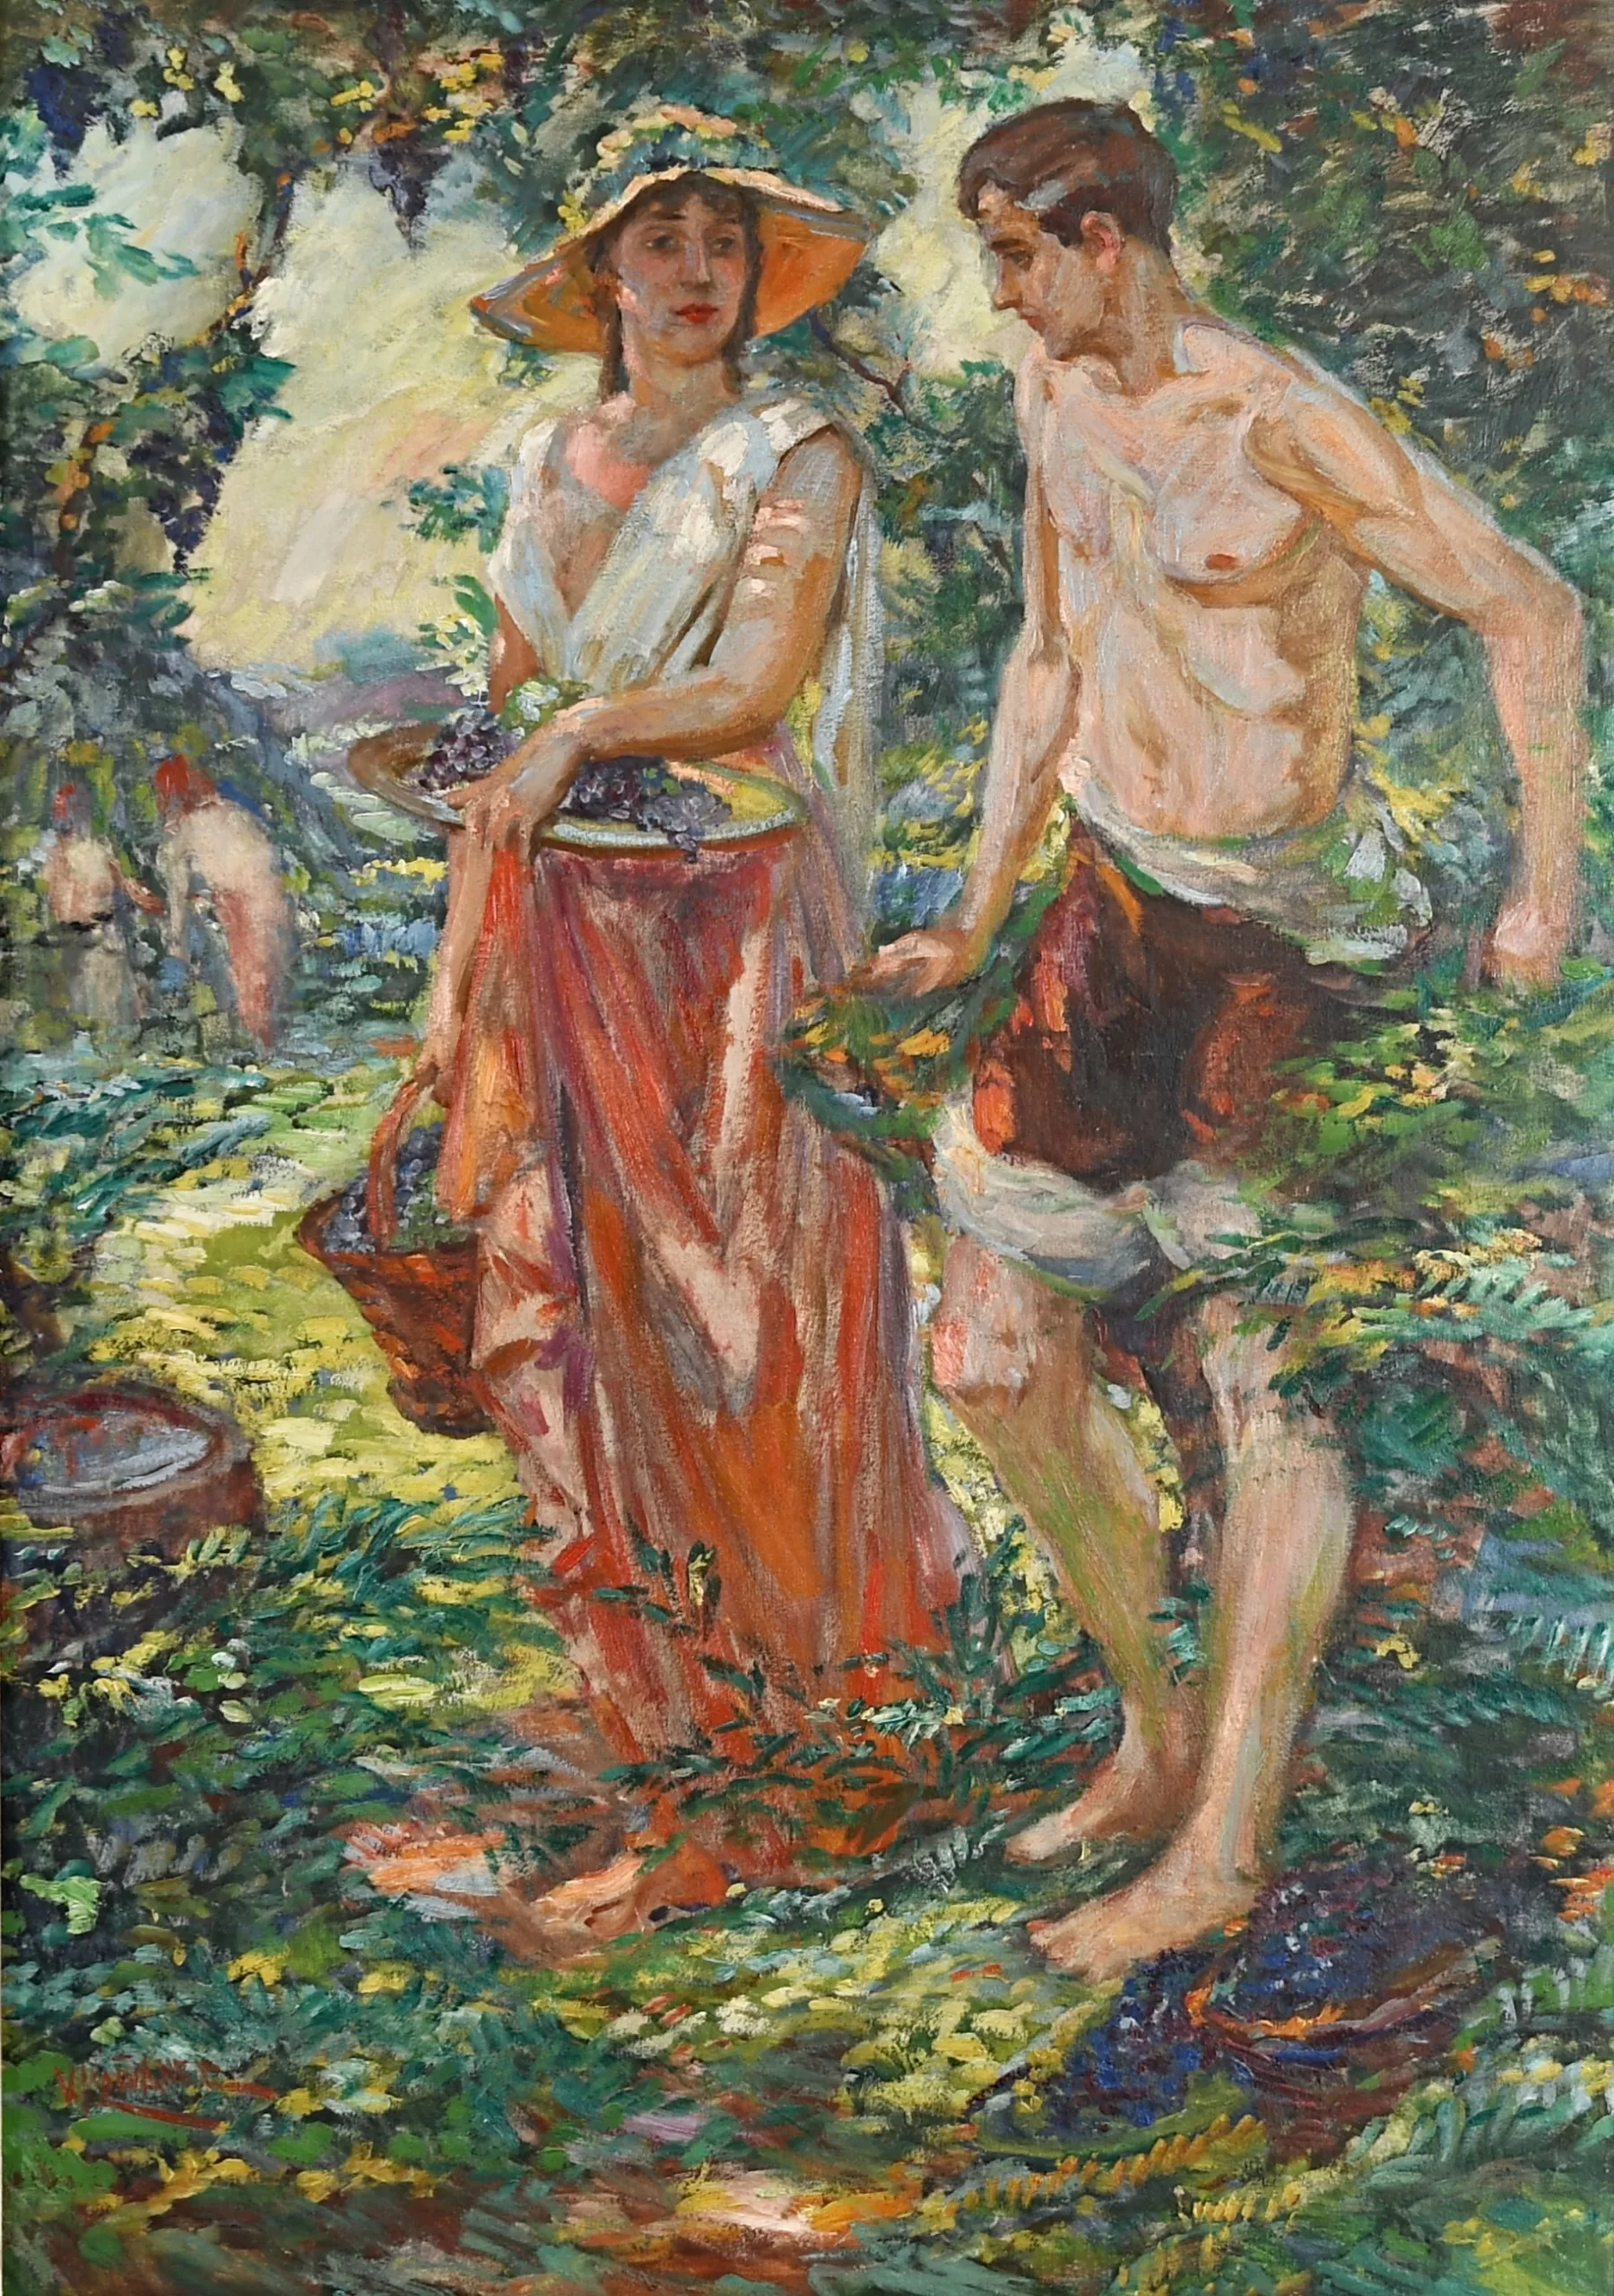 Košvanec Vlastimil (1887-1961), Sběr hroznů